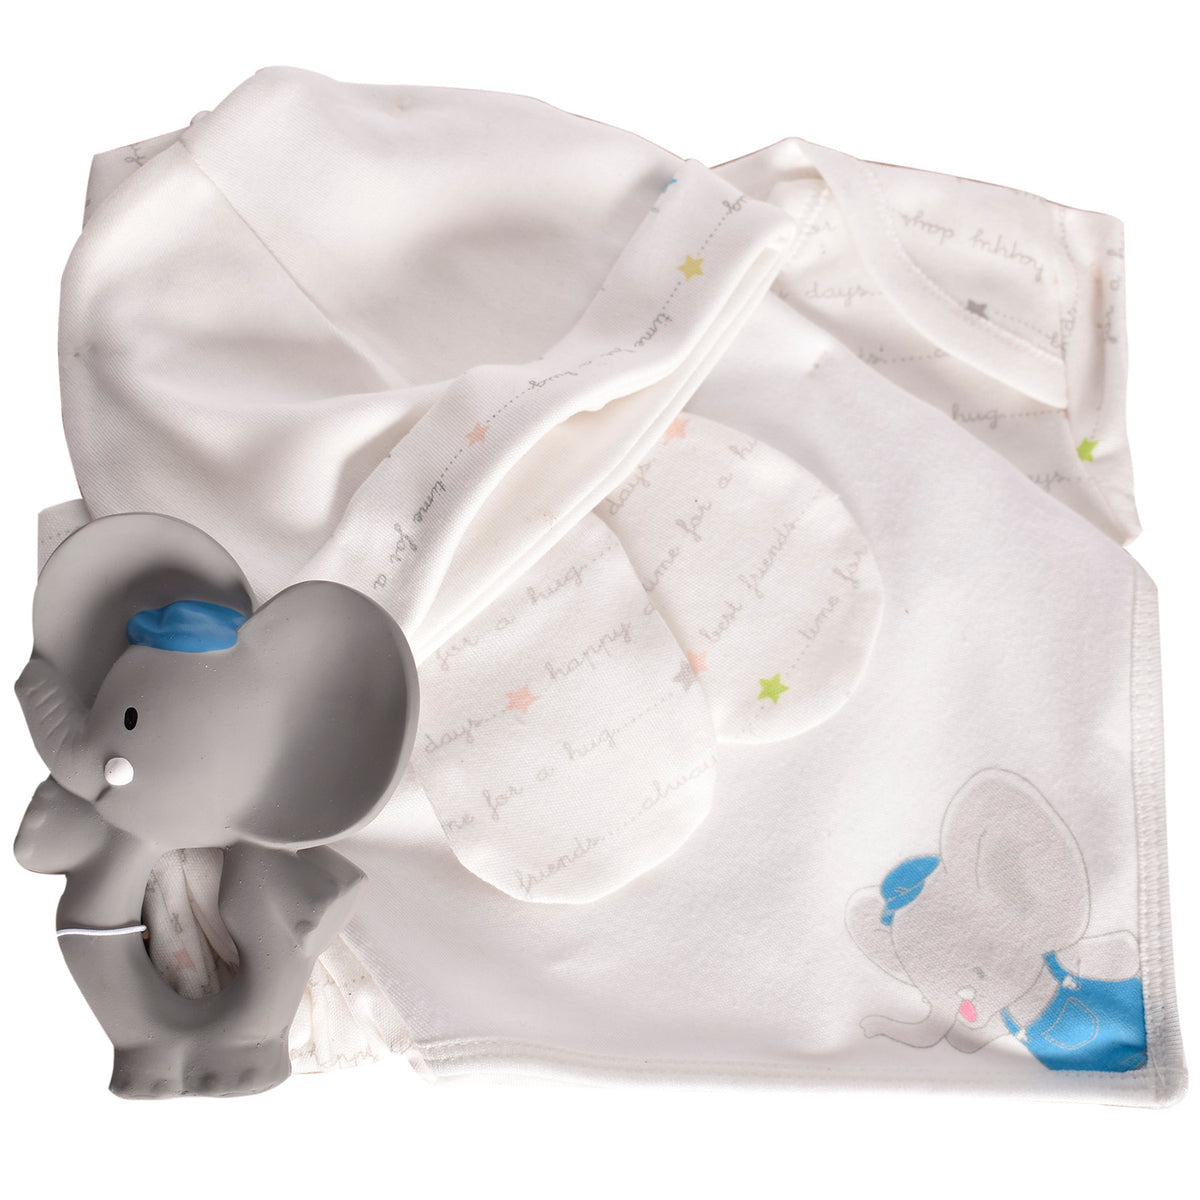 Alvin Elephant New Born Baby Gift Set